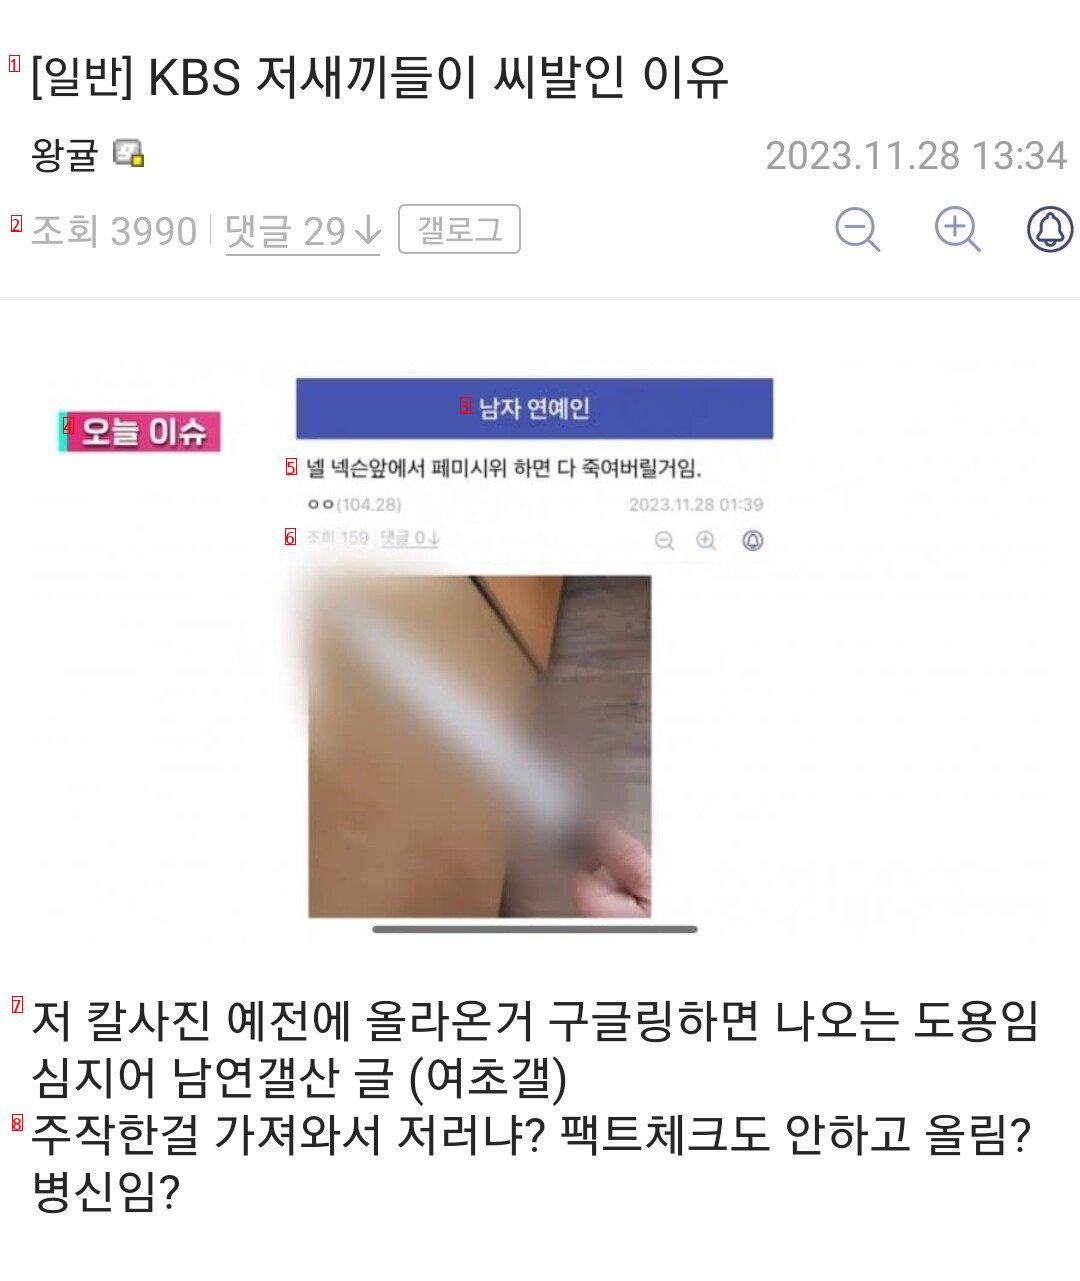 Nexon Femi incident KBS news came out. Sssssssssssssss